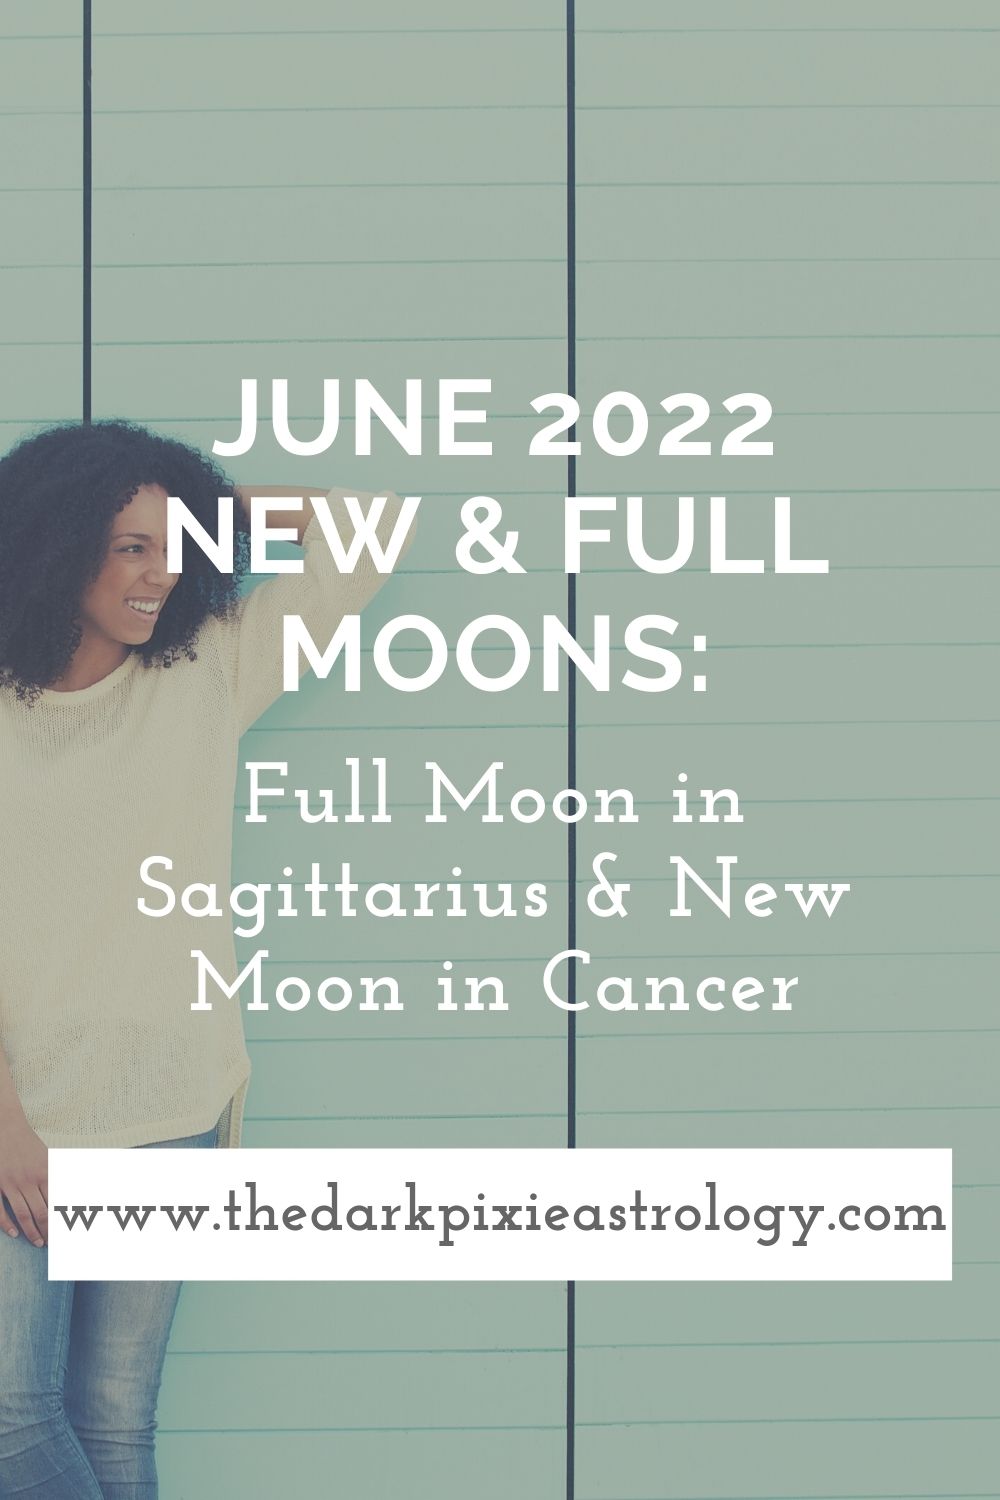 June 2022 New & Full Moons Full Moon in Sagittarius & New Moon in